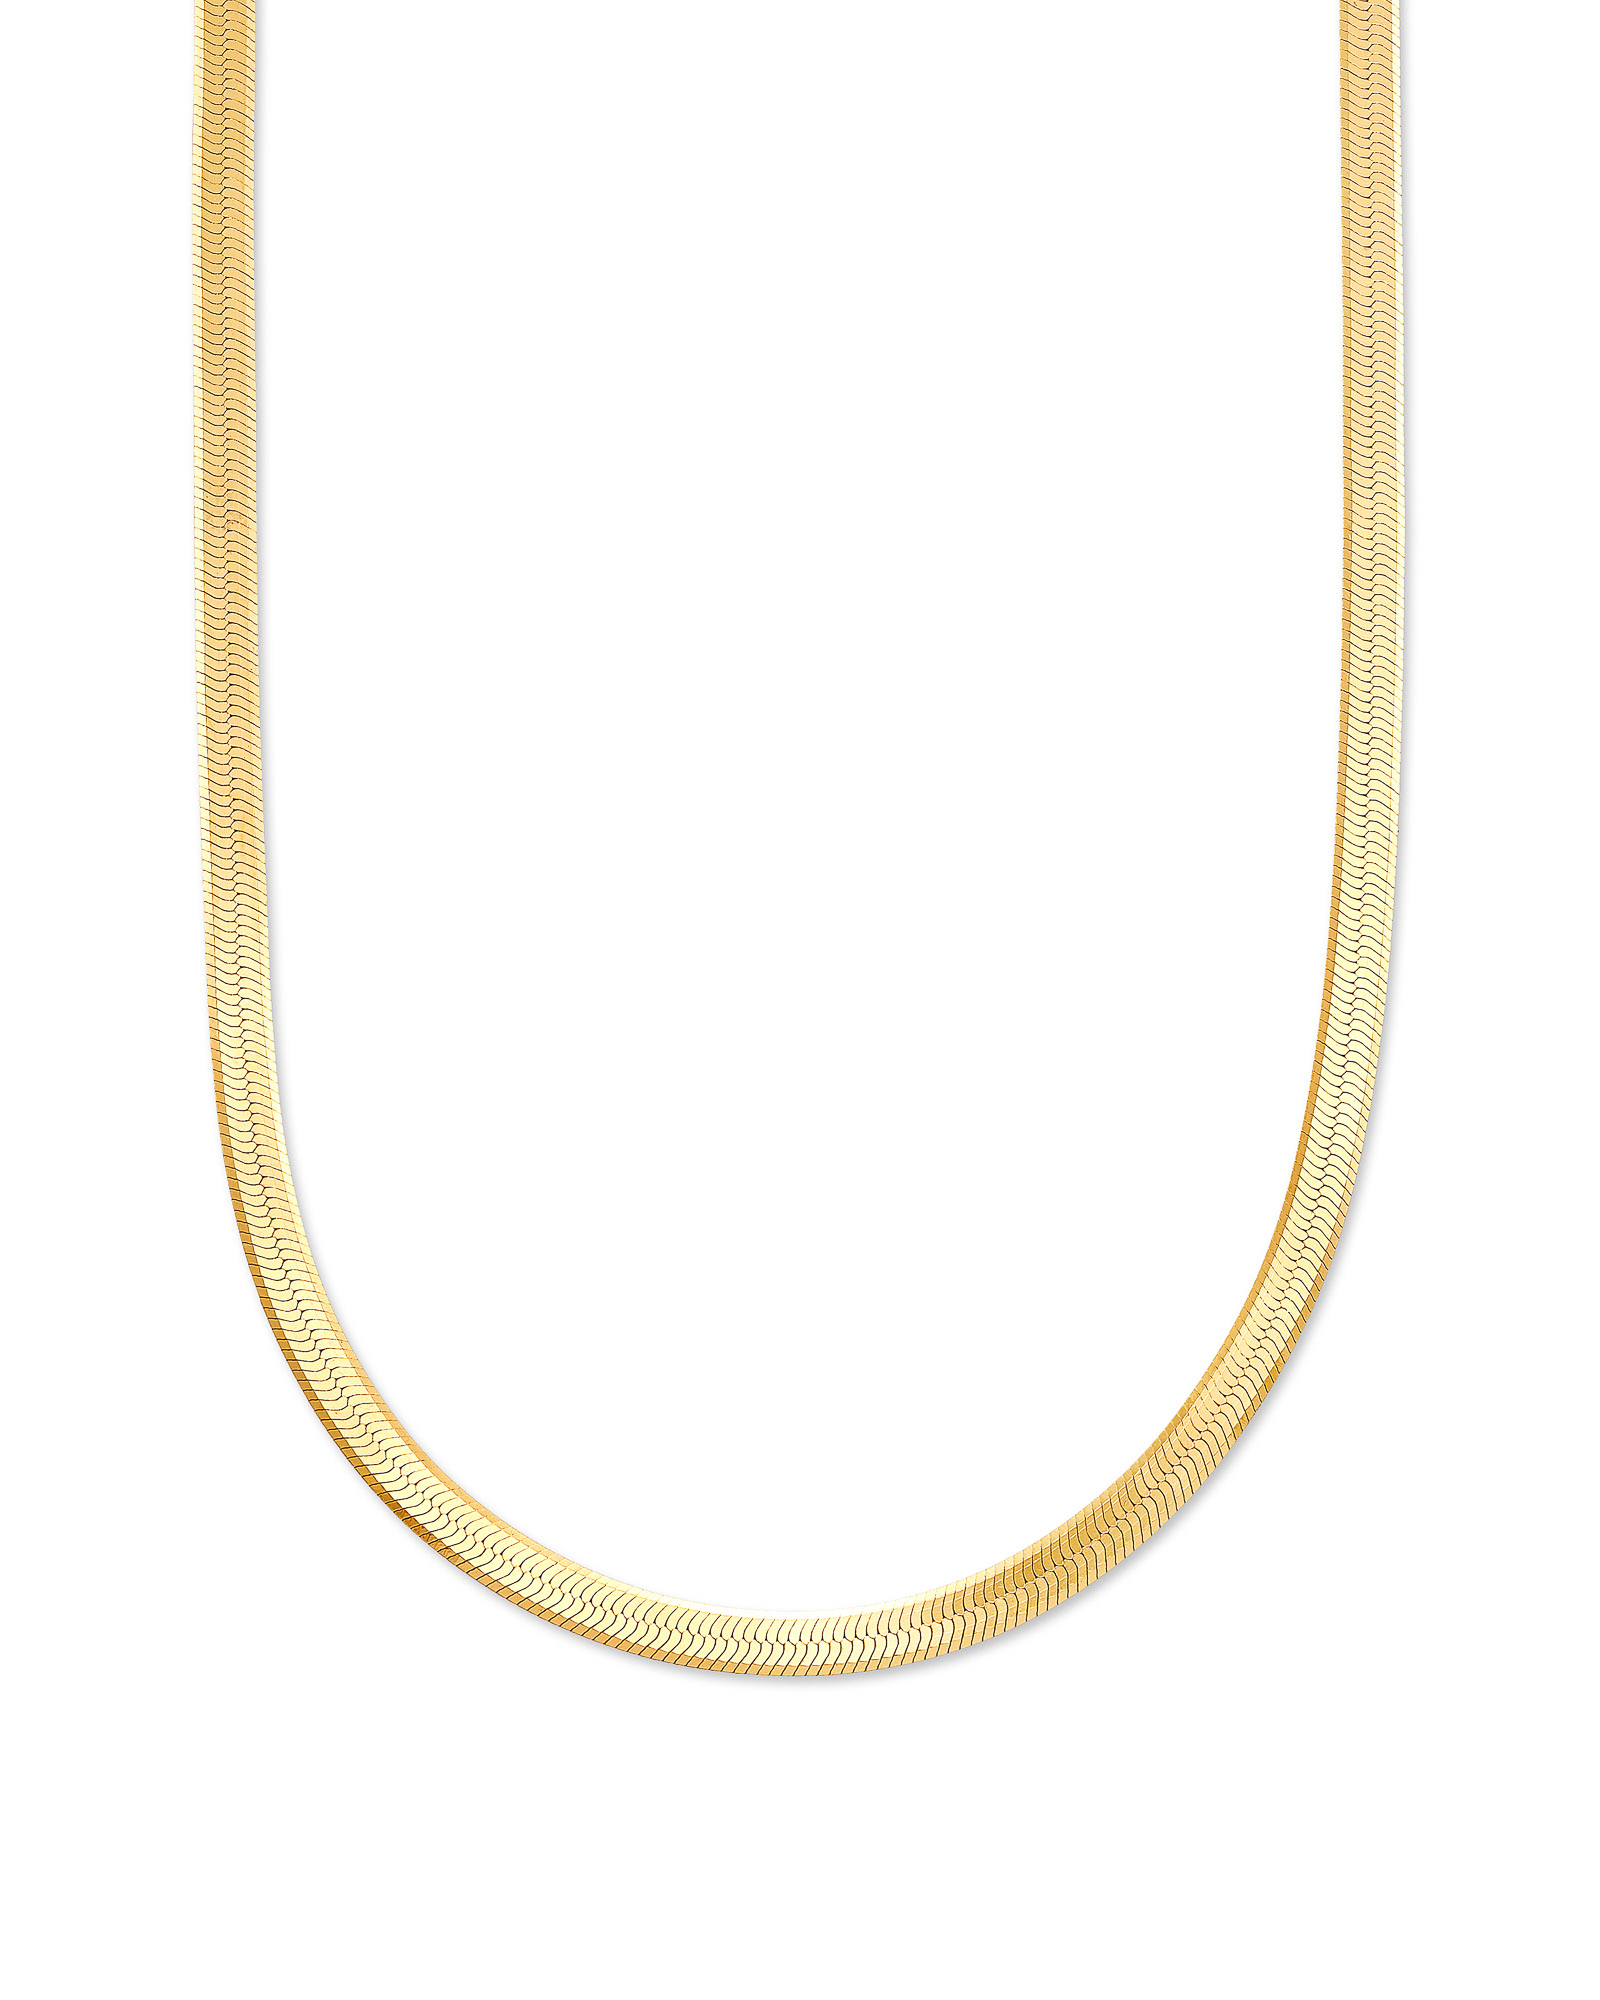 kendra scott herringbone chain necklace 18k yellow gold vermeil 00 lg